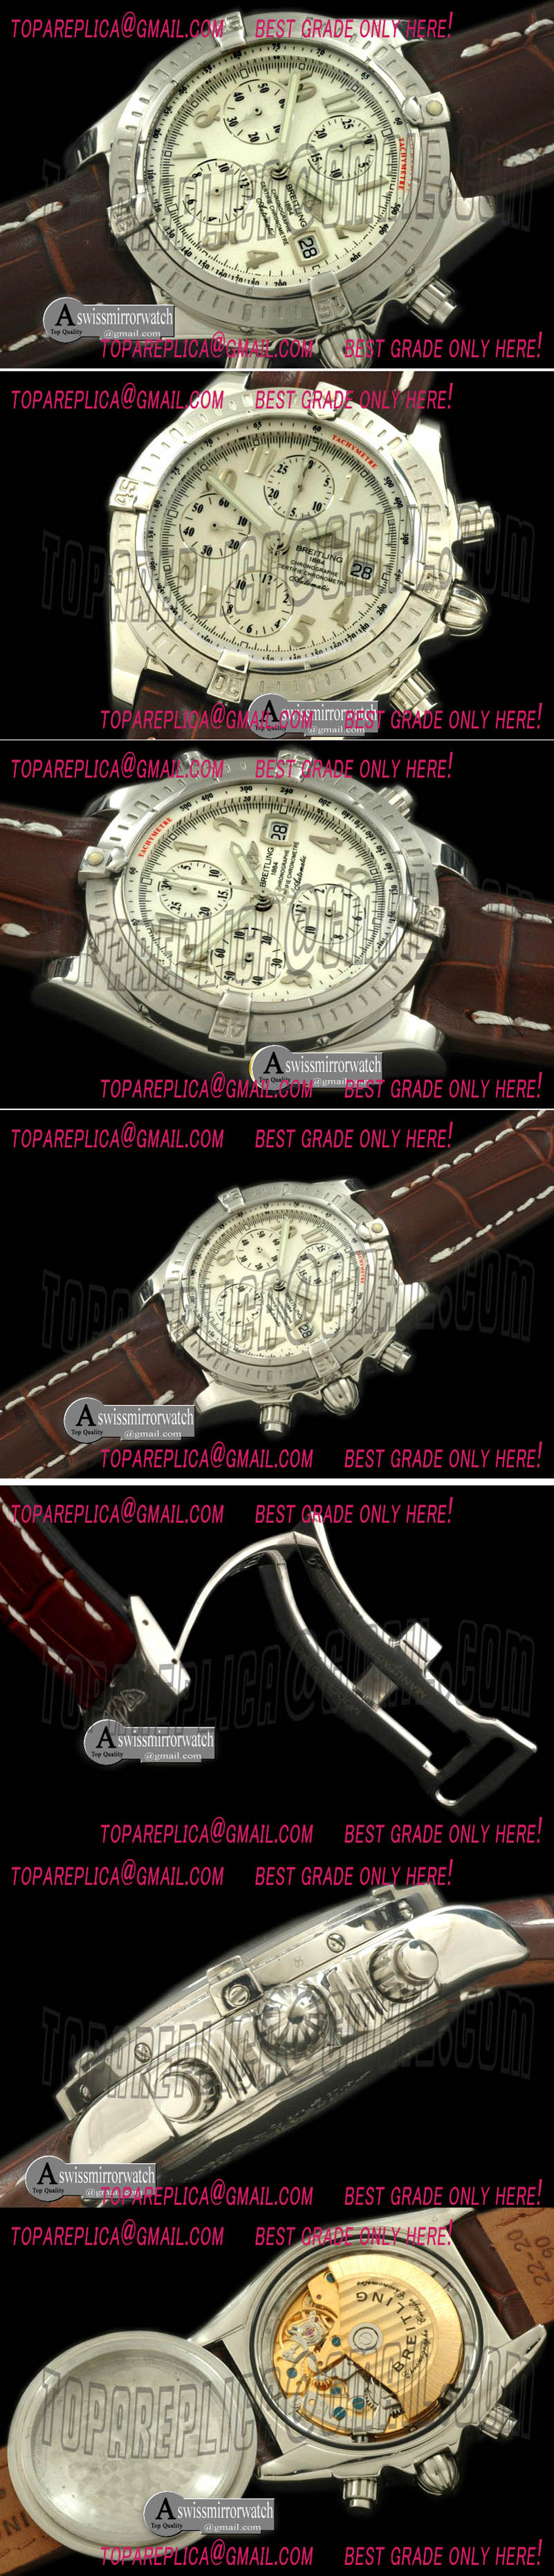 Replica Breitling Chronomat Evolution  Watches